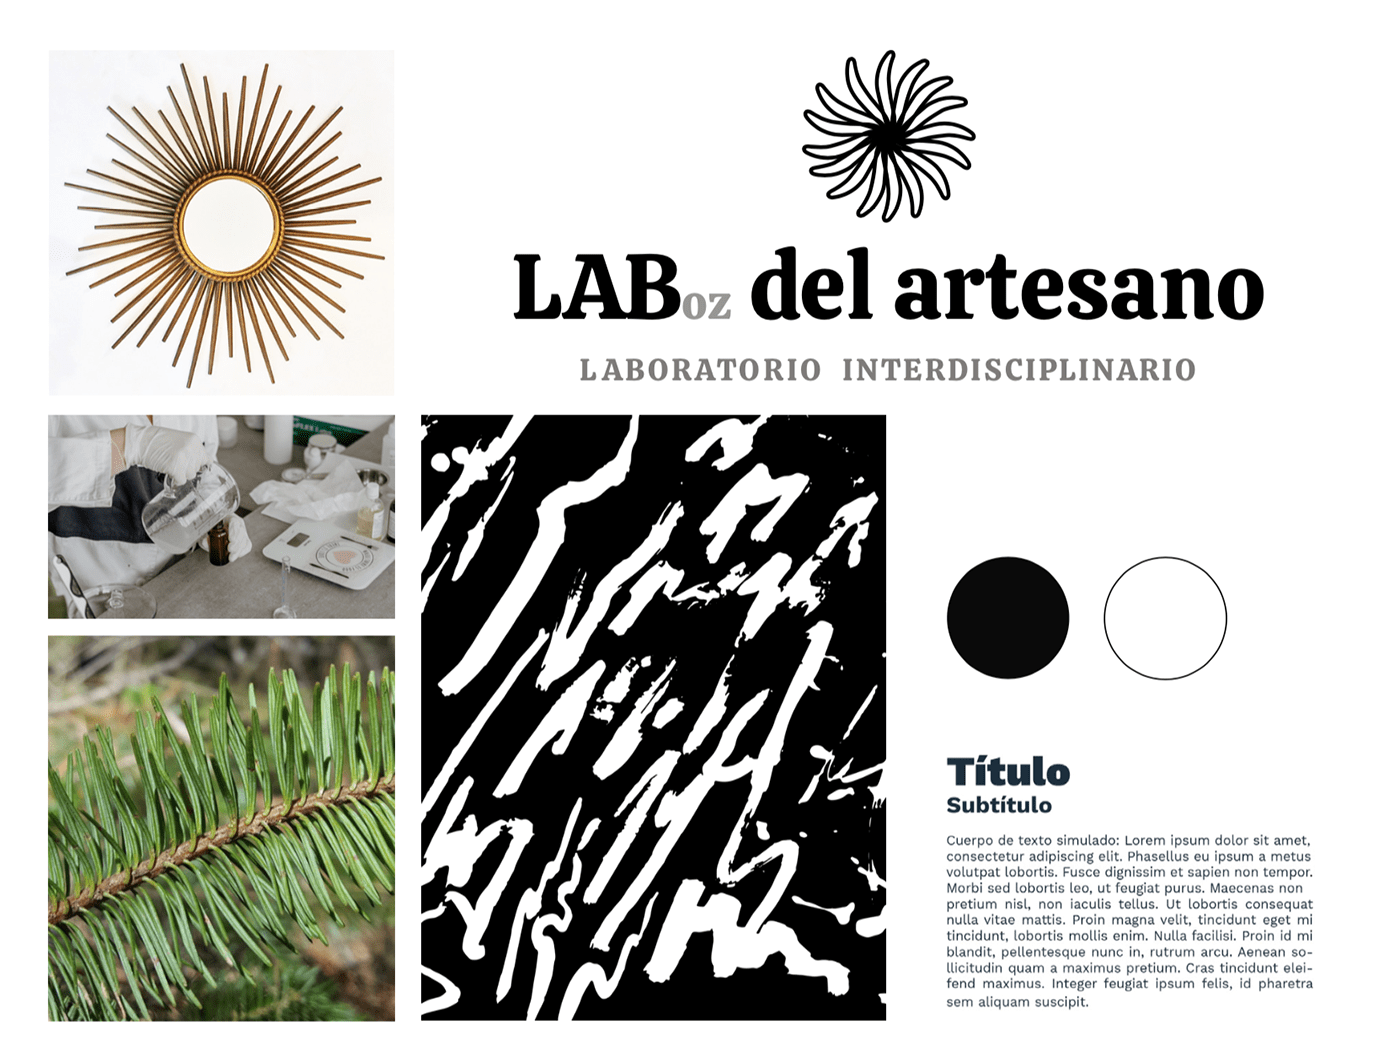 craft artisanal artisan oaxaca mexico lab laboratorio Collective  strategic design Experimentation